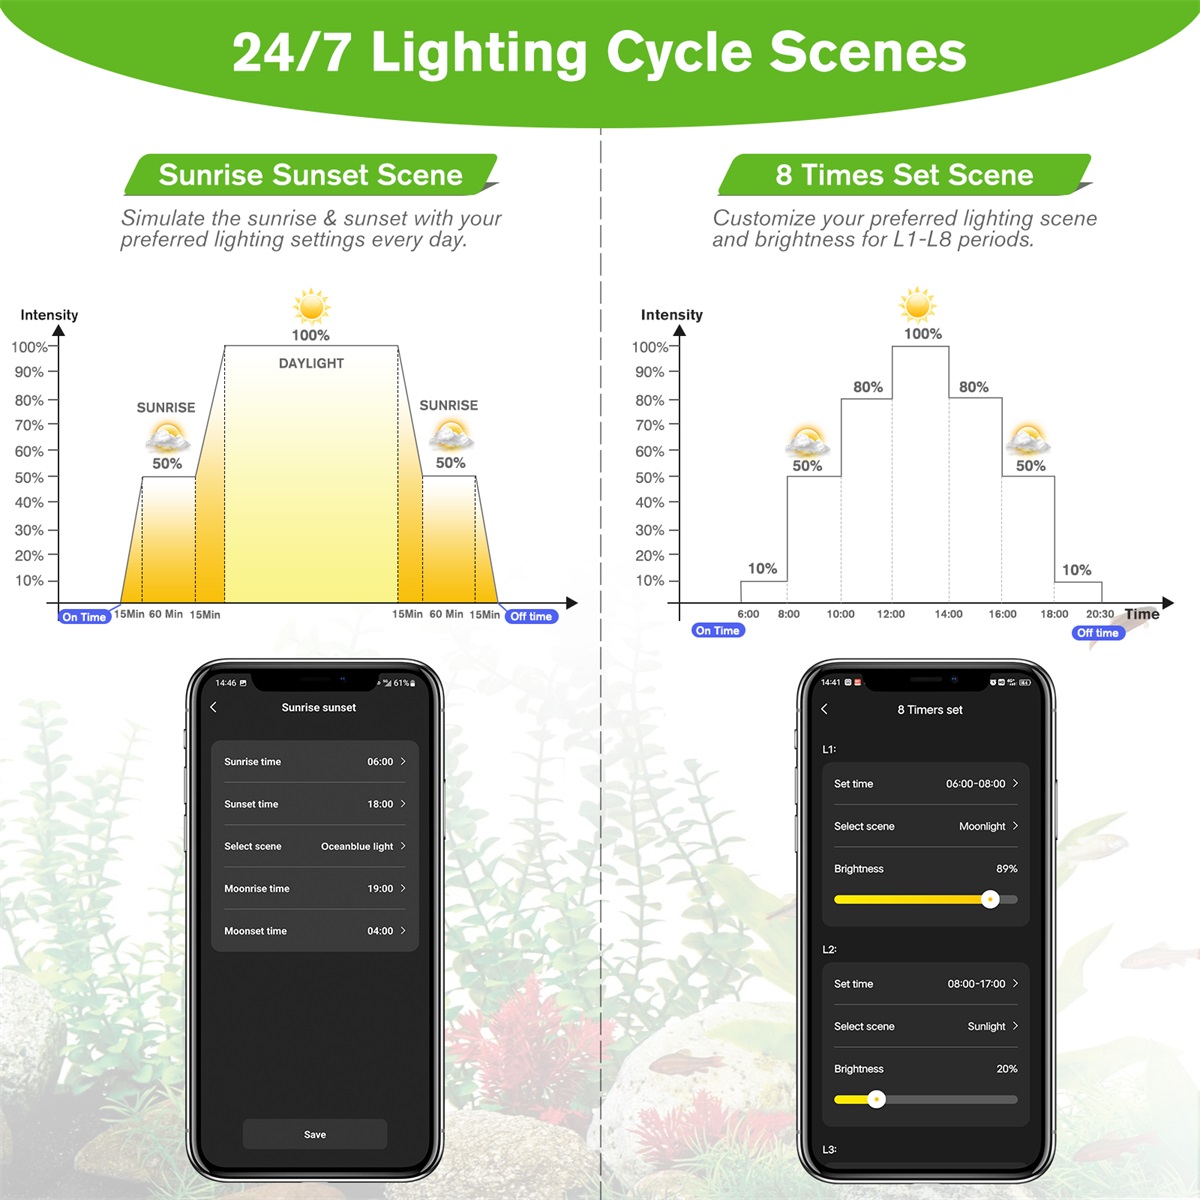 24/7 lighting cycle scenes